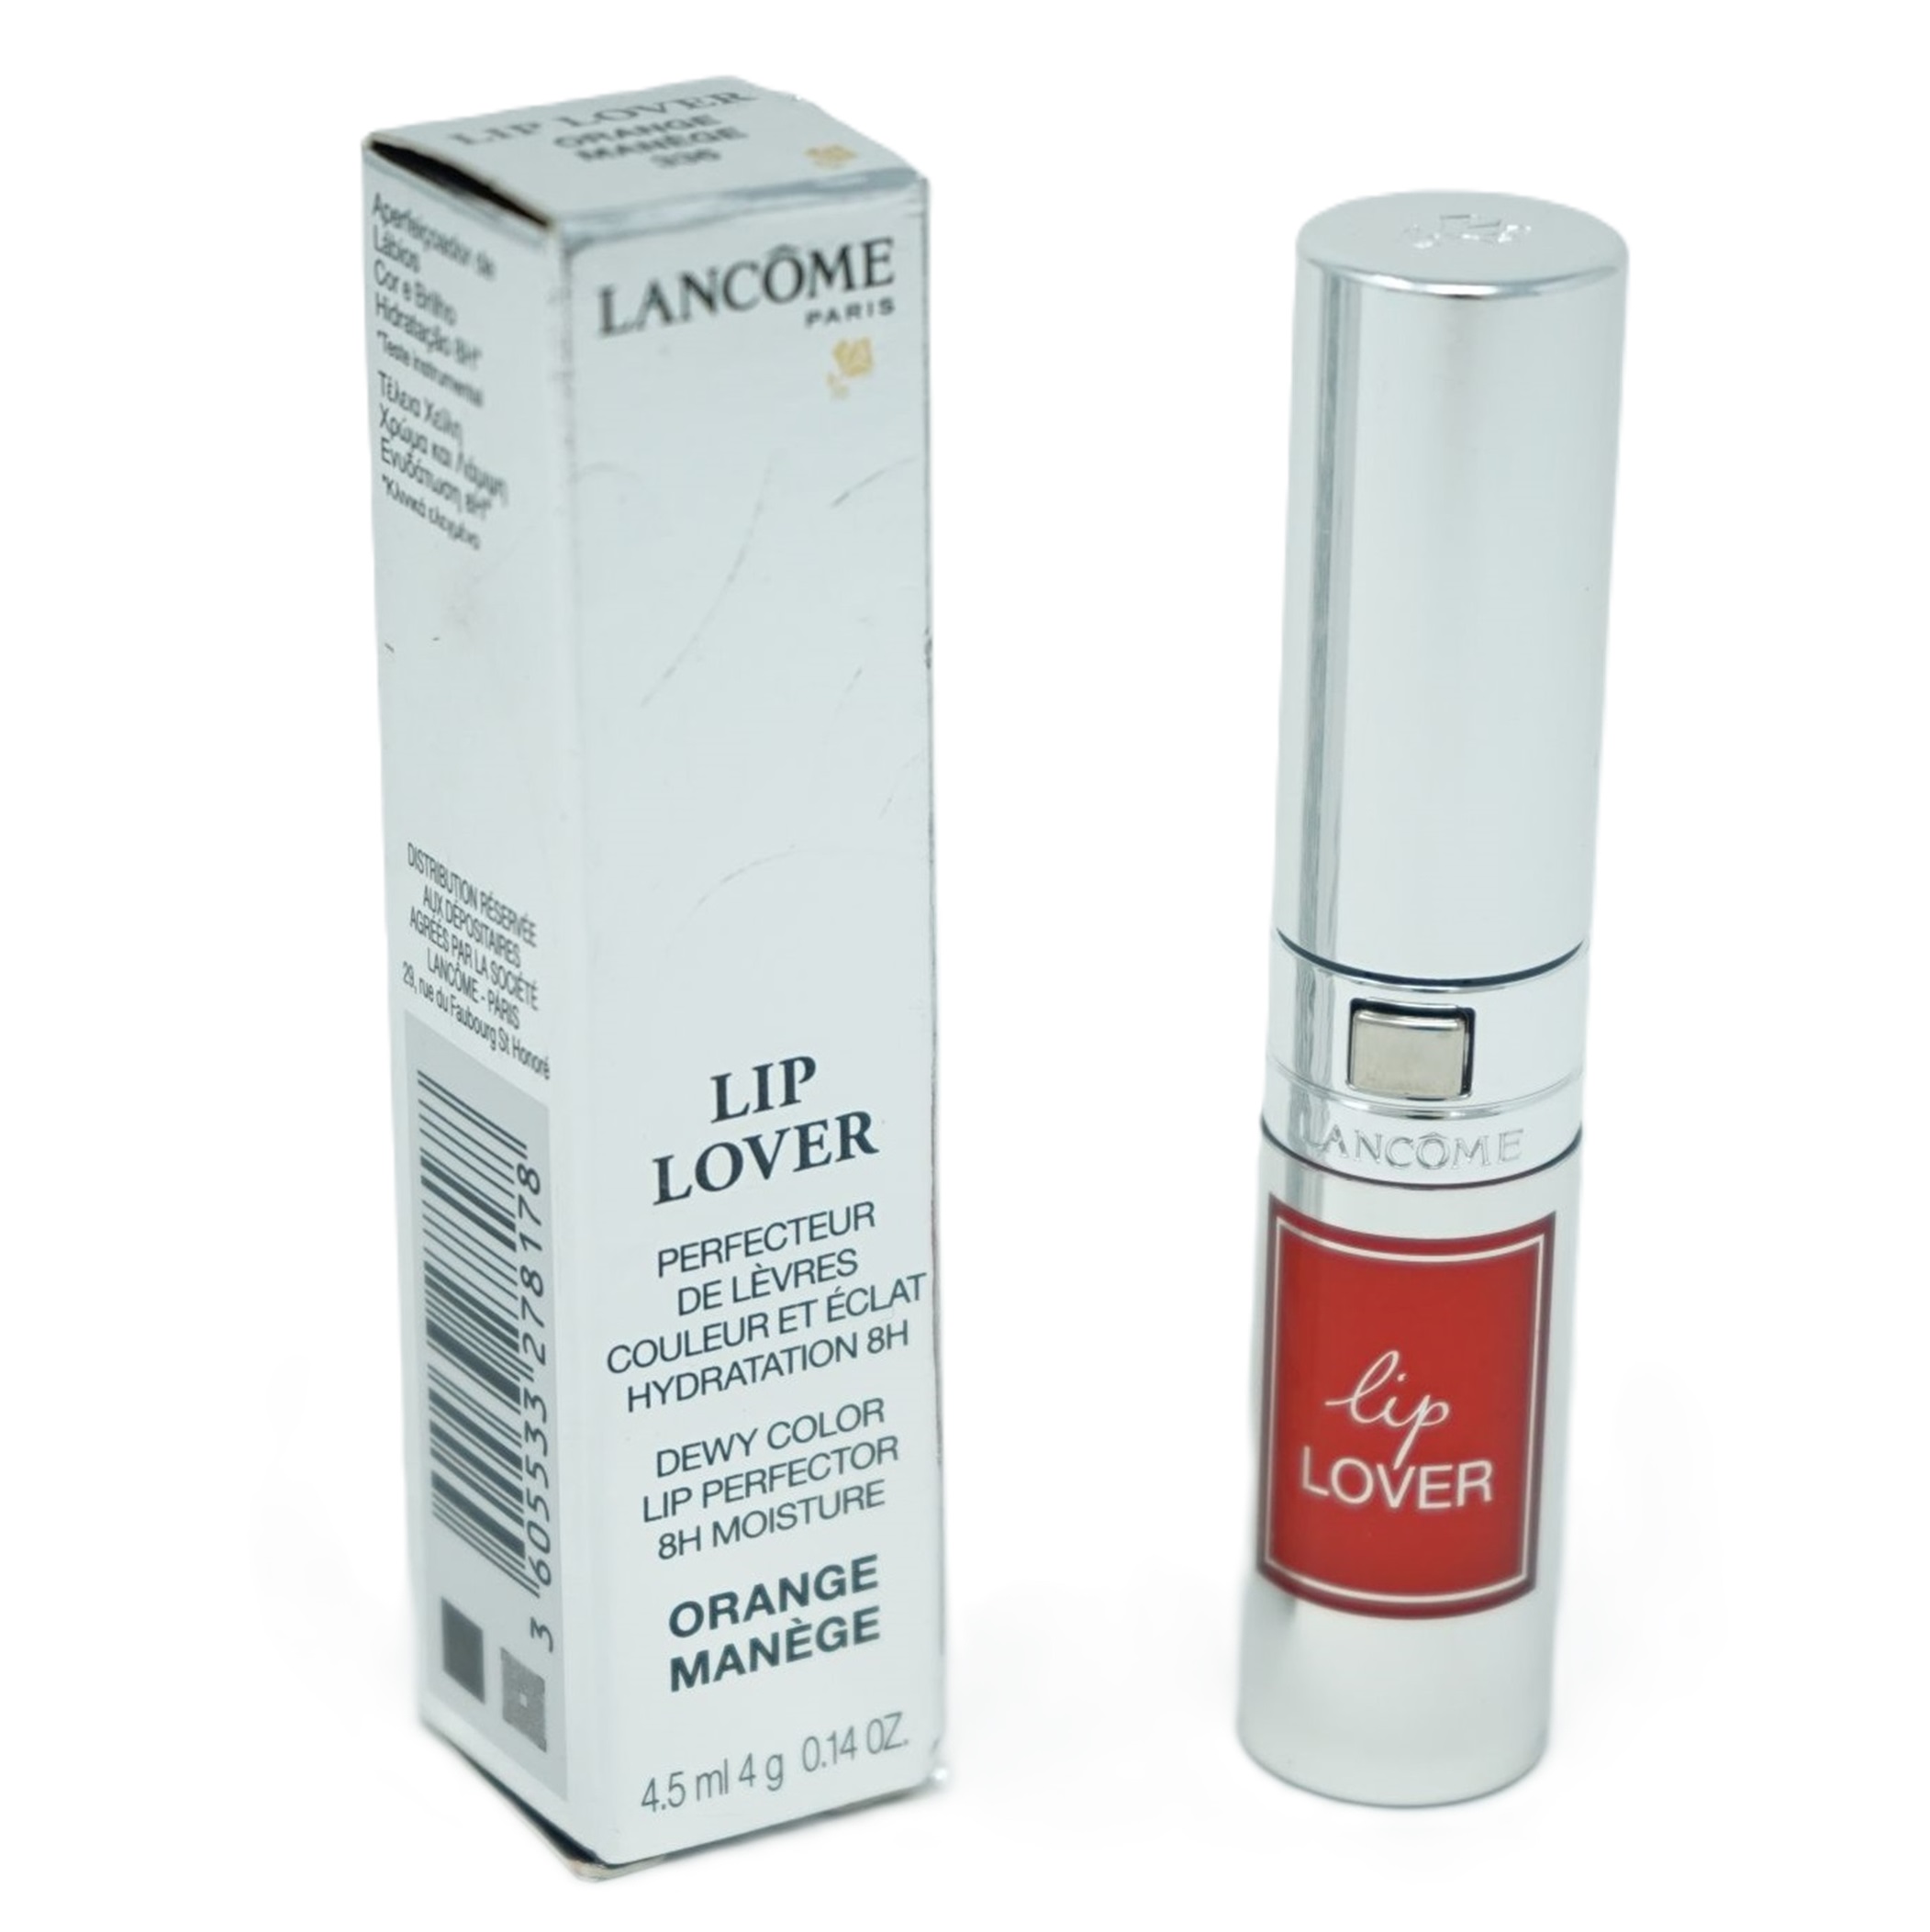 Lancome Lip Lover Lipgloss 336 Orange Manege